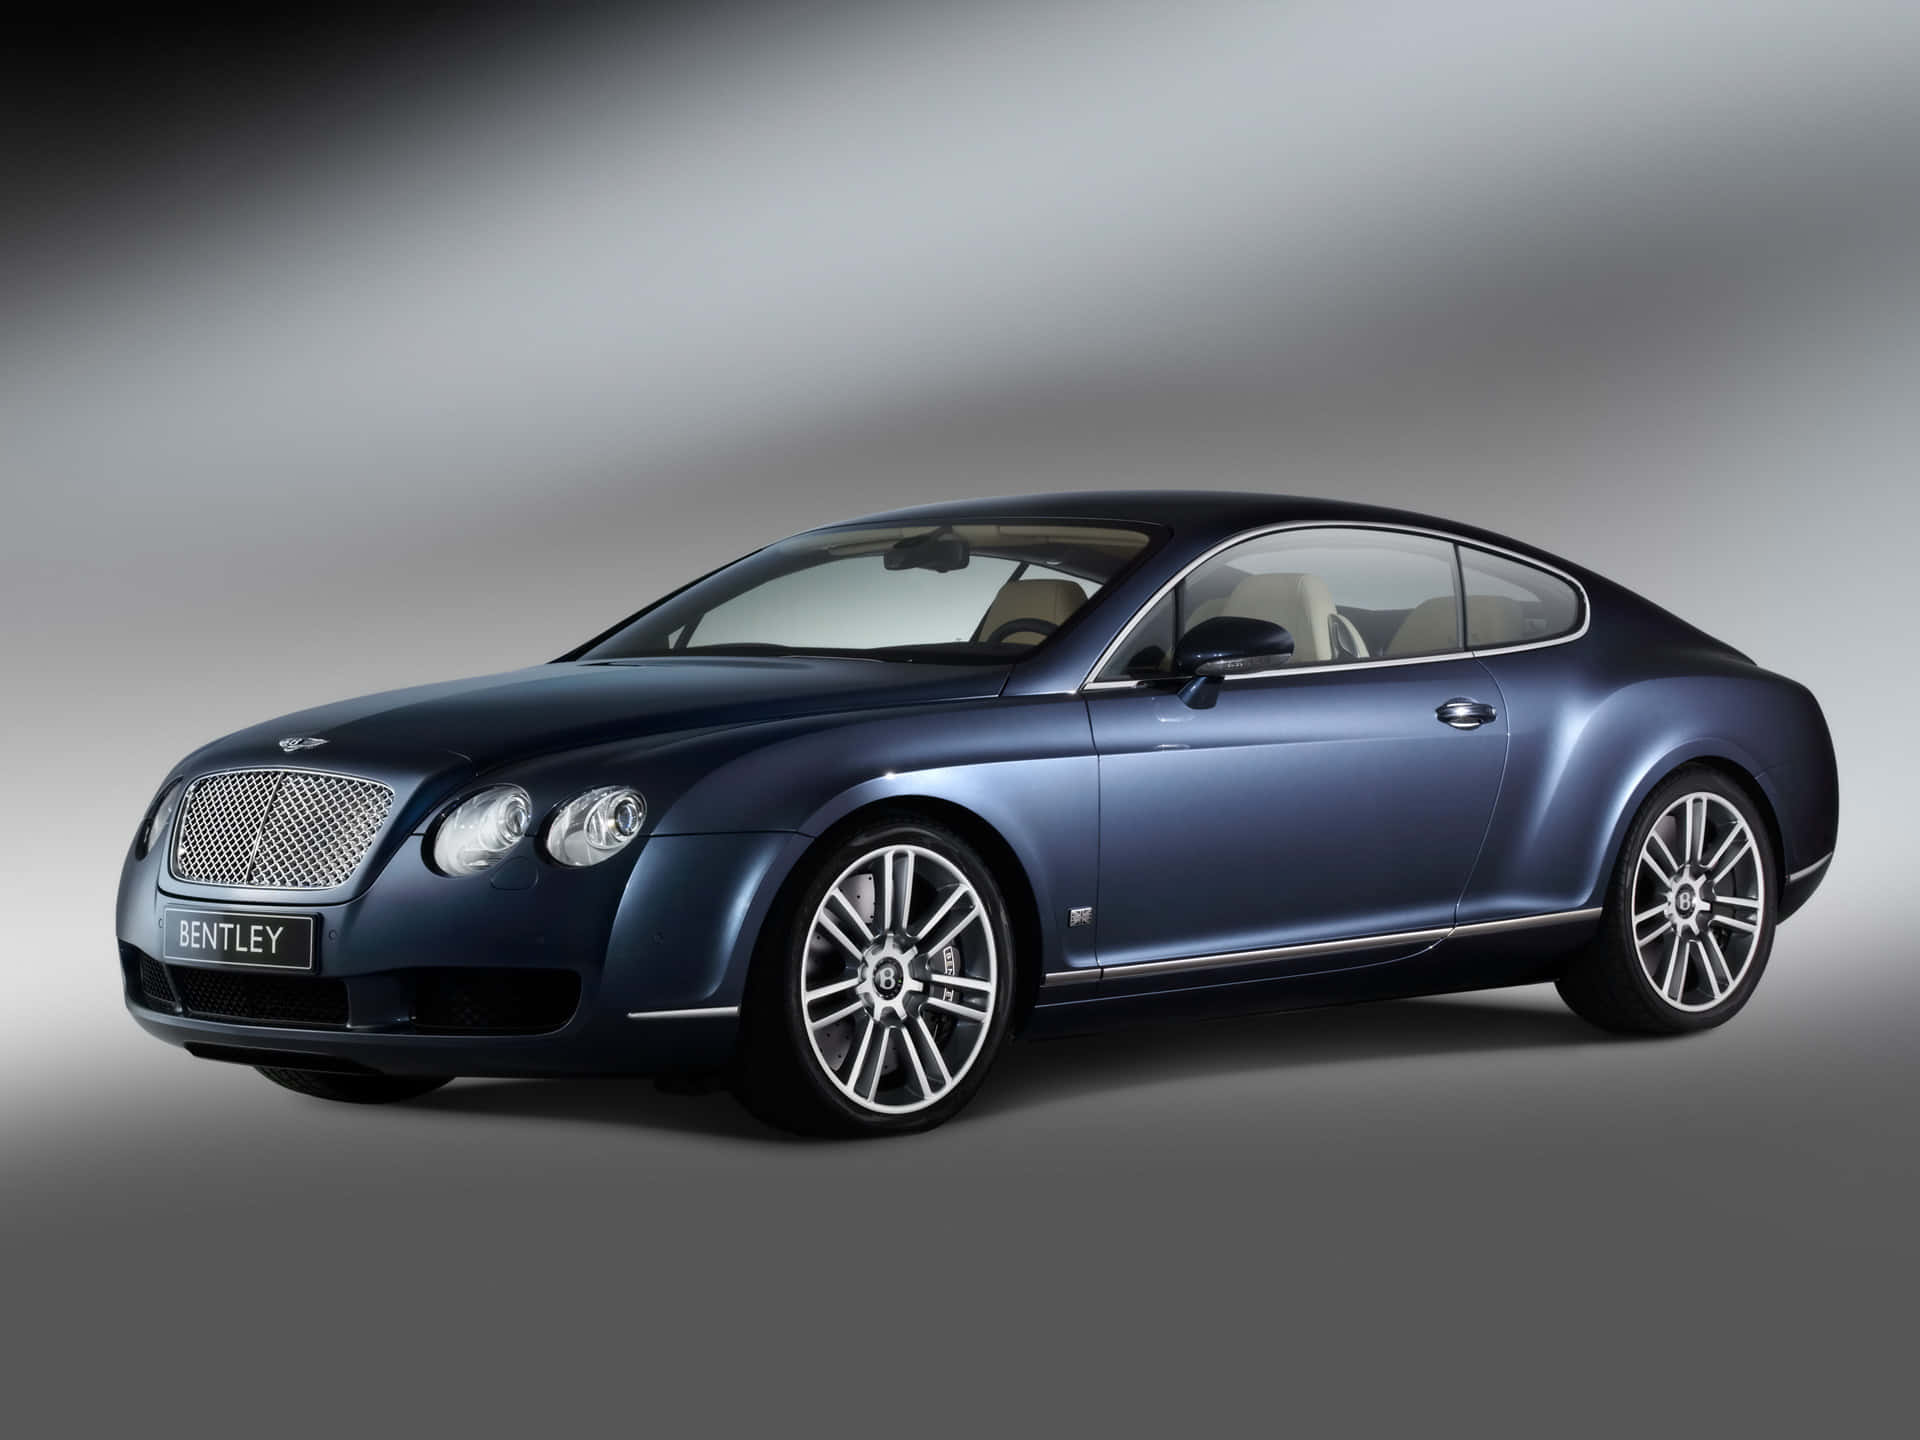 A sleek Bentley Continental GT glimmering under the spotlight